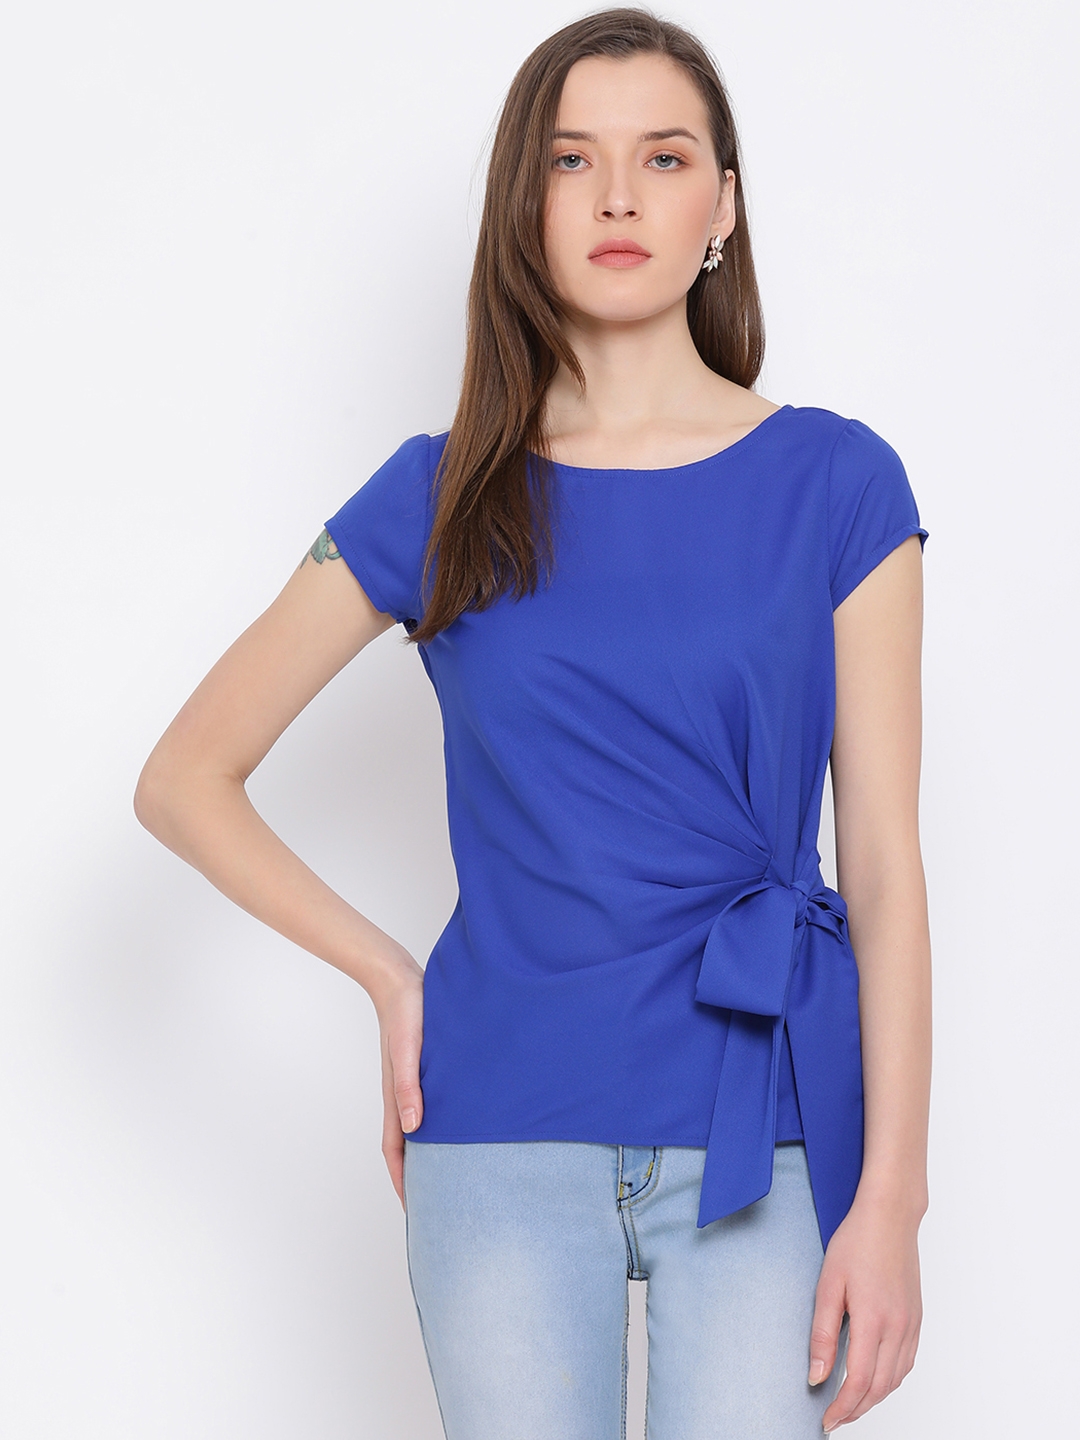 DRAAX fashions | Draax Fashions Women Blue Solid Top